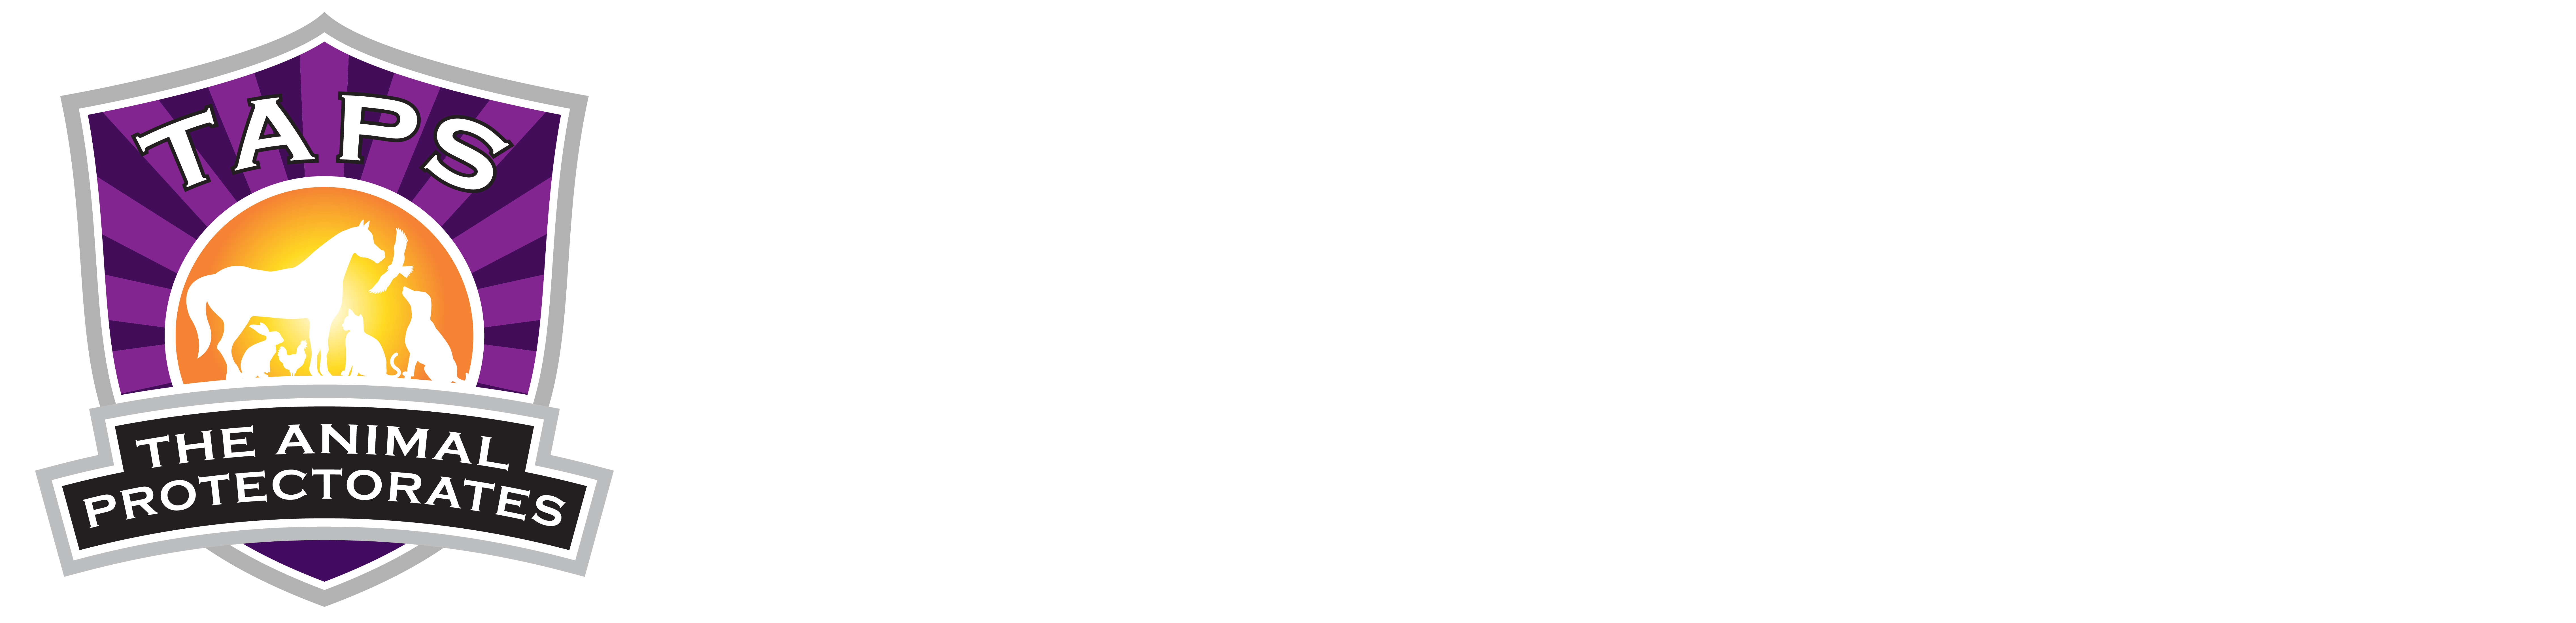 The Animal Protectorates (taps)